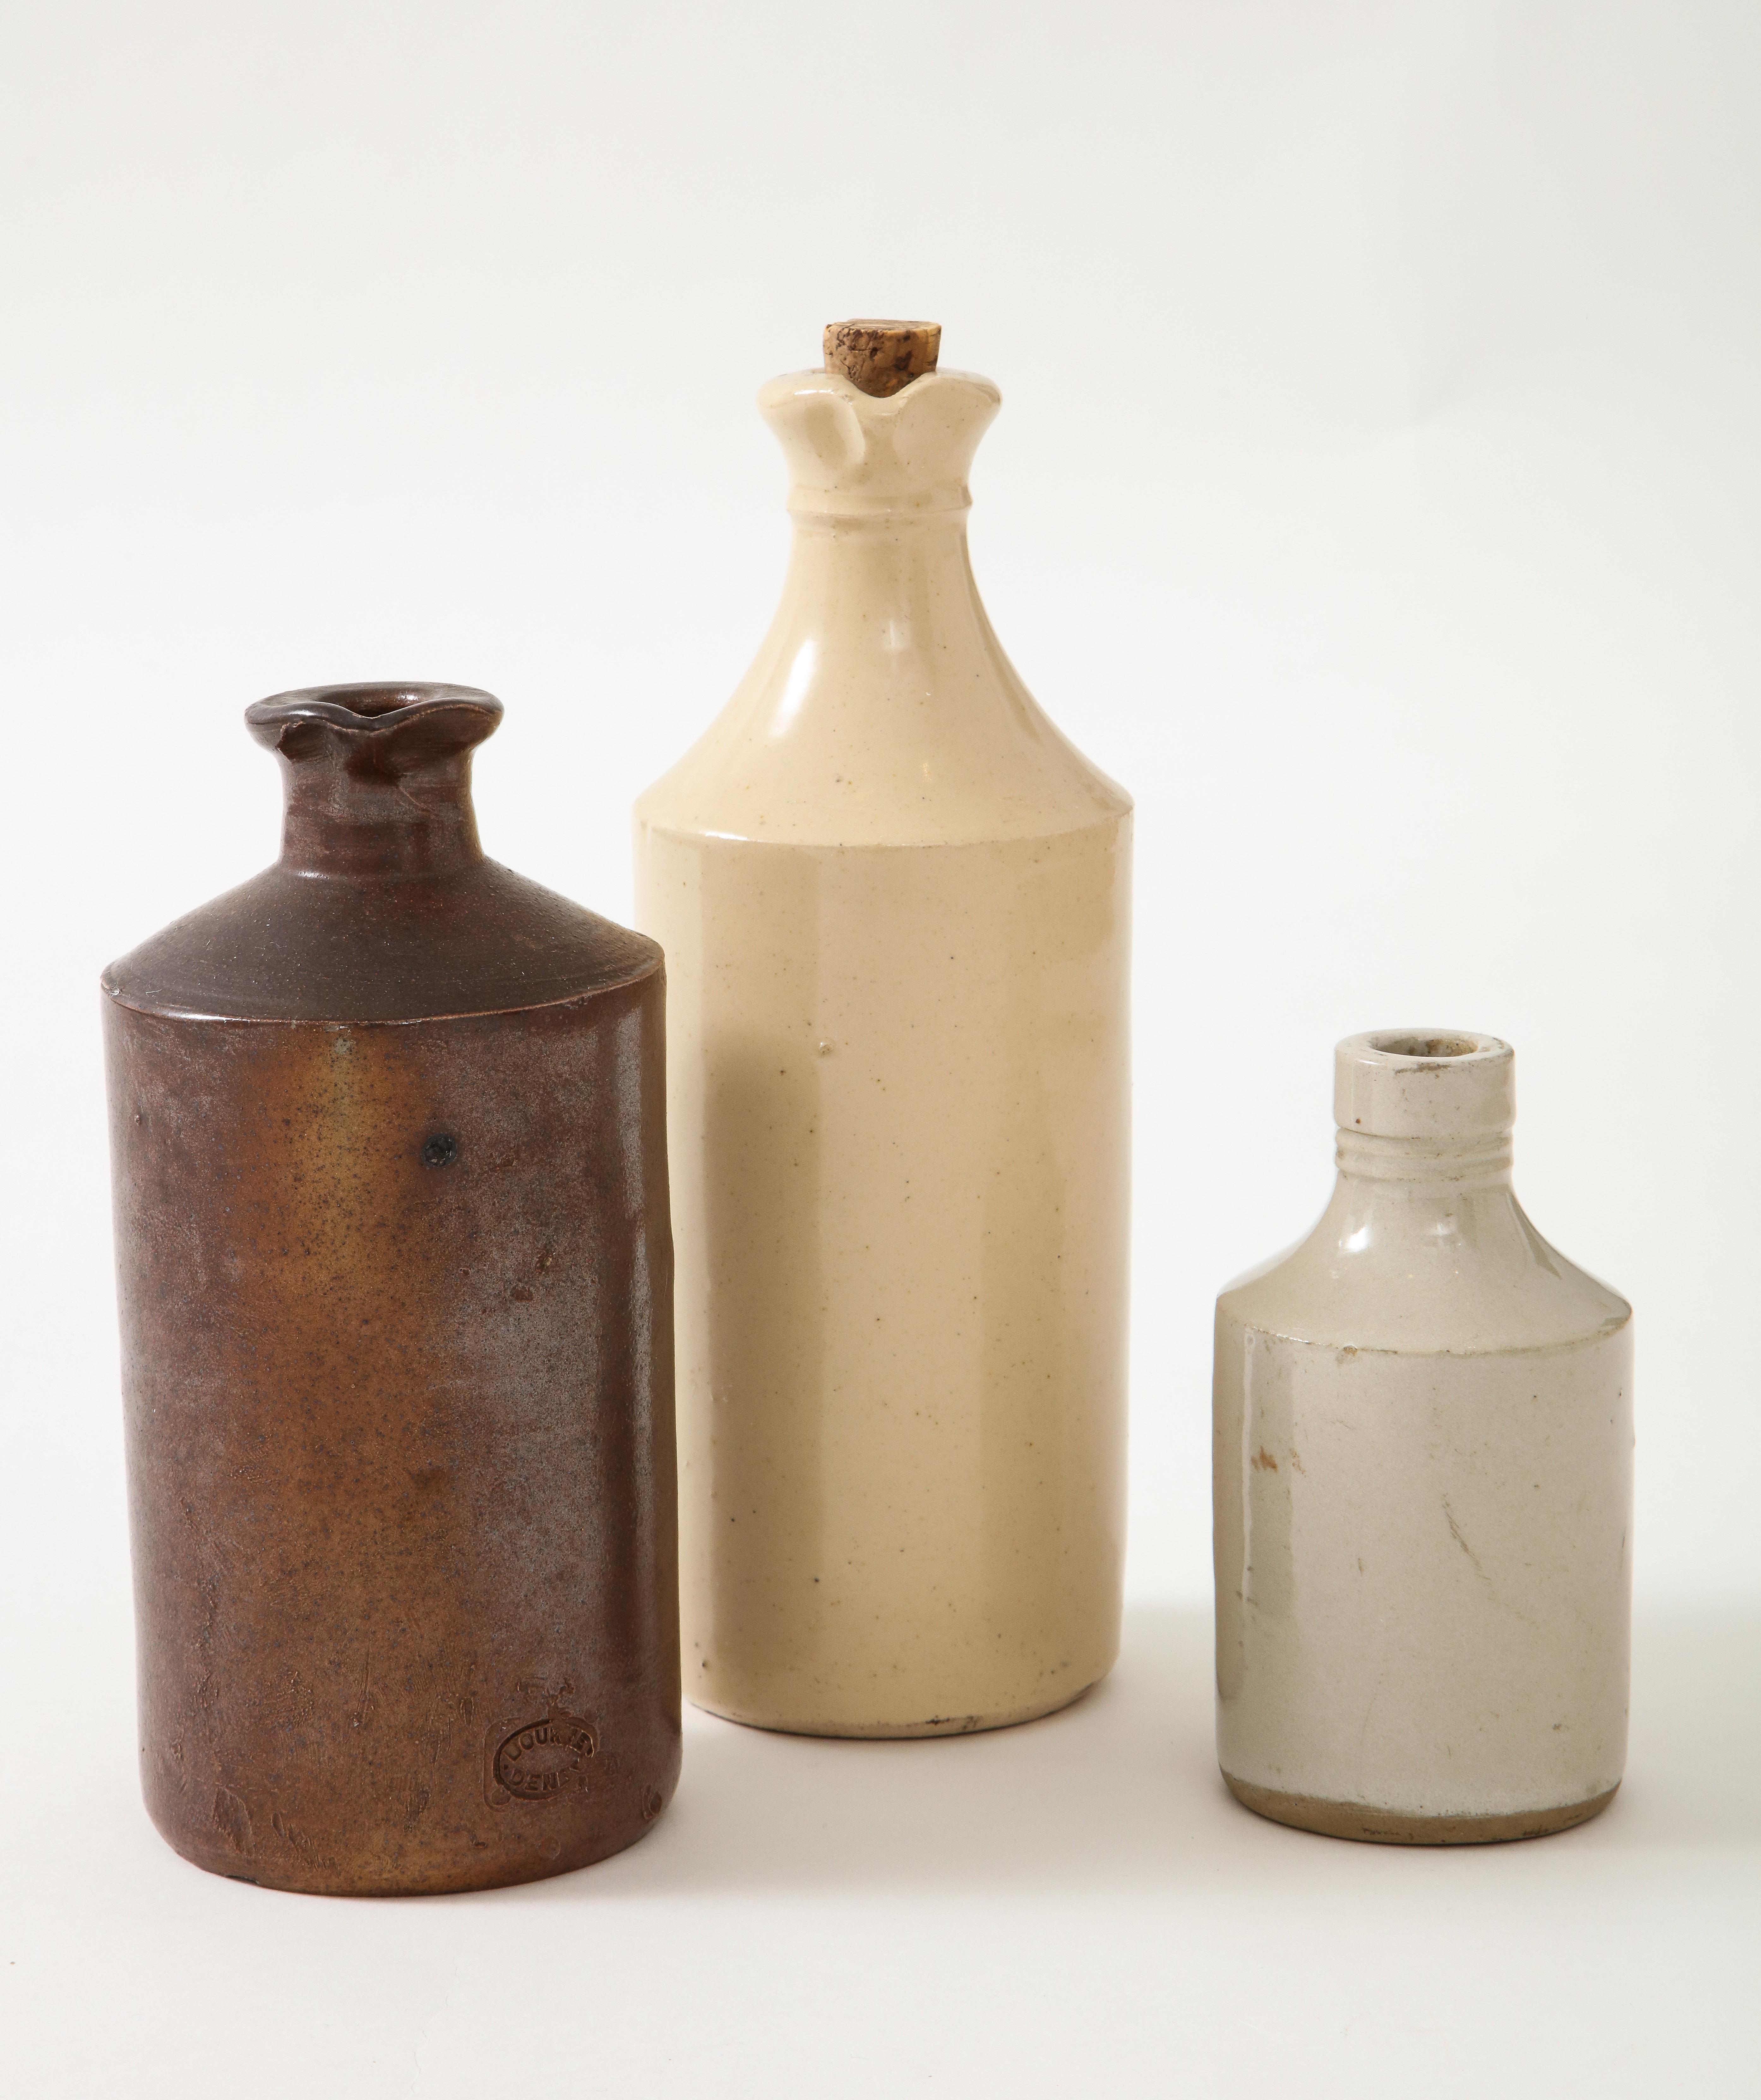 Set of three 19th century Japanese ink bottles

Ceramic, earthenware, stoneware

1. Measures: Height 9.5, diameter 3.5 in.
2. Height 7.5, diameter 3.75 in.
3. Height 5, diameter 2.75 in.